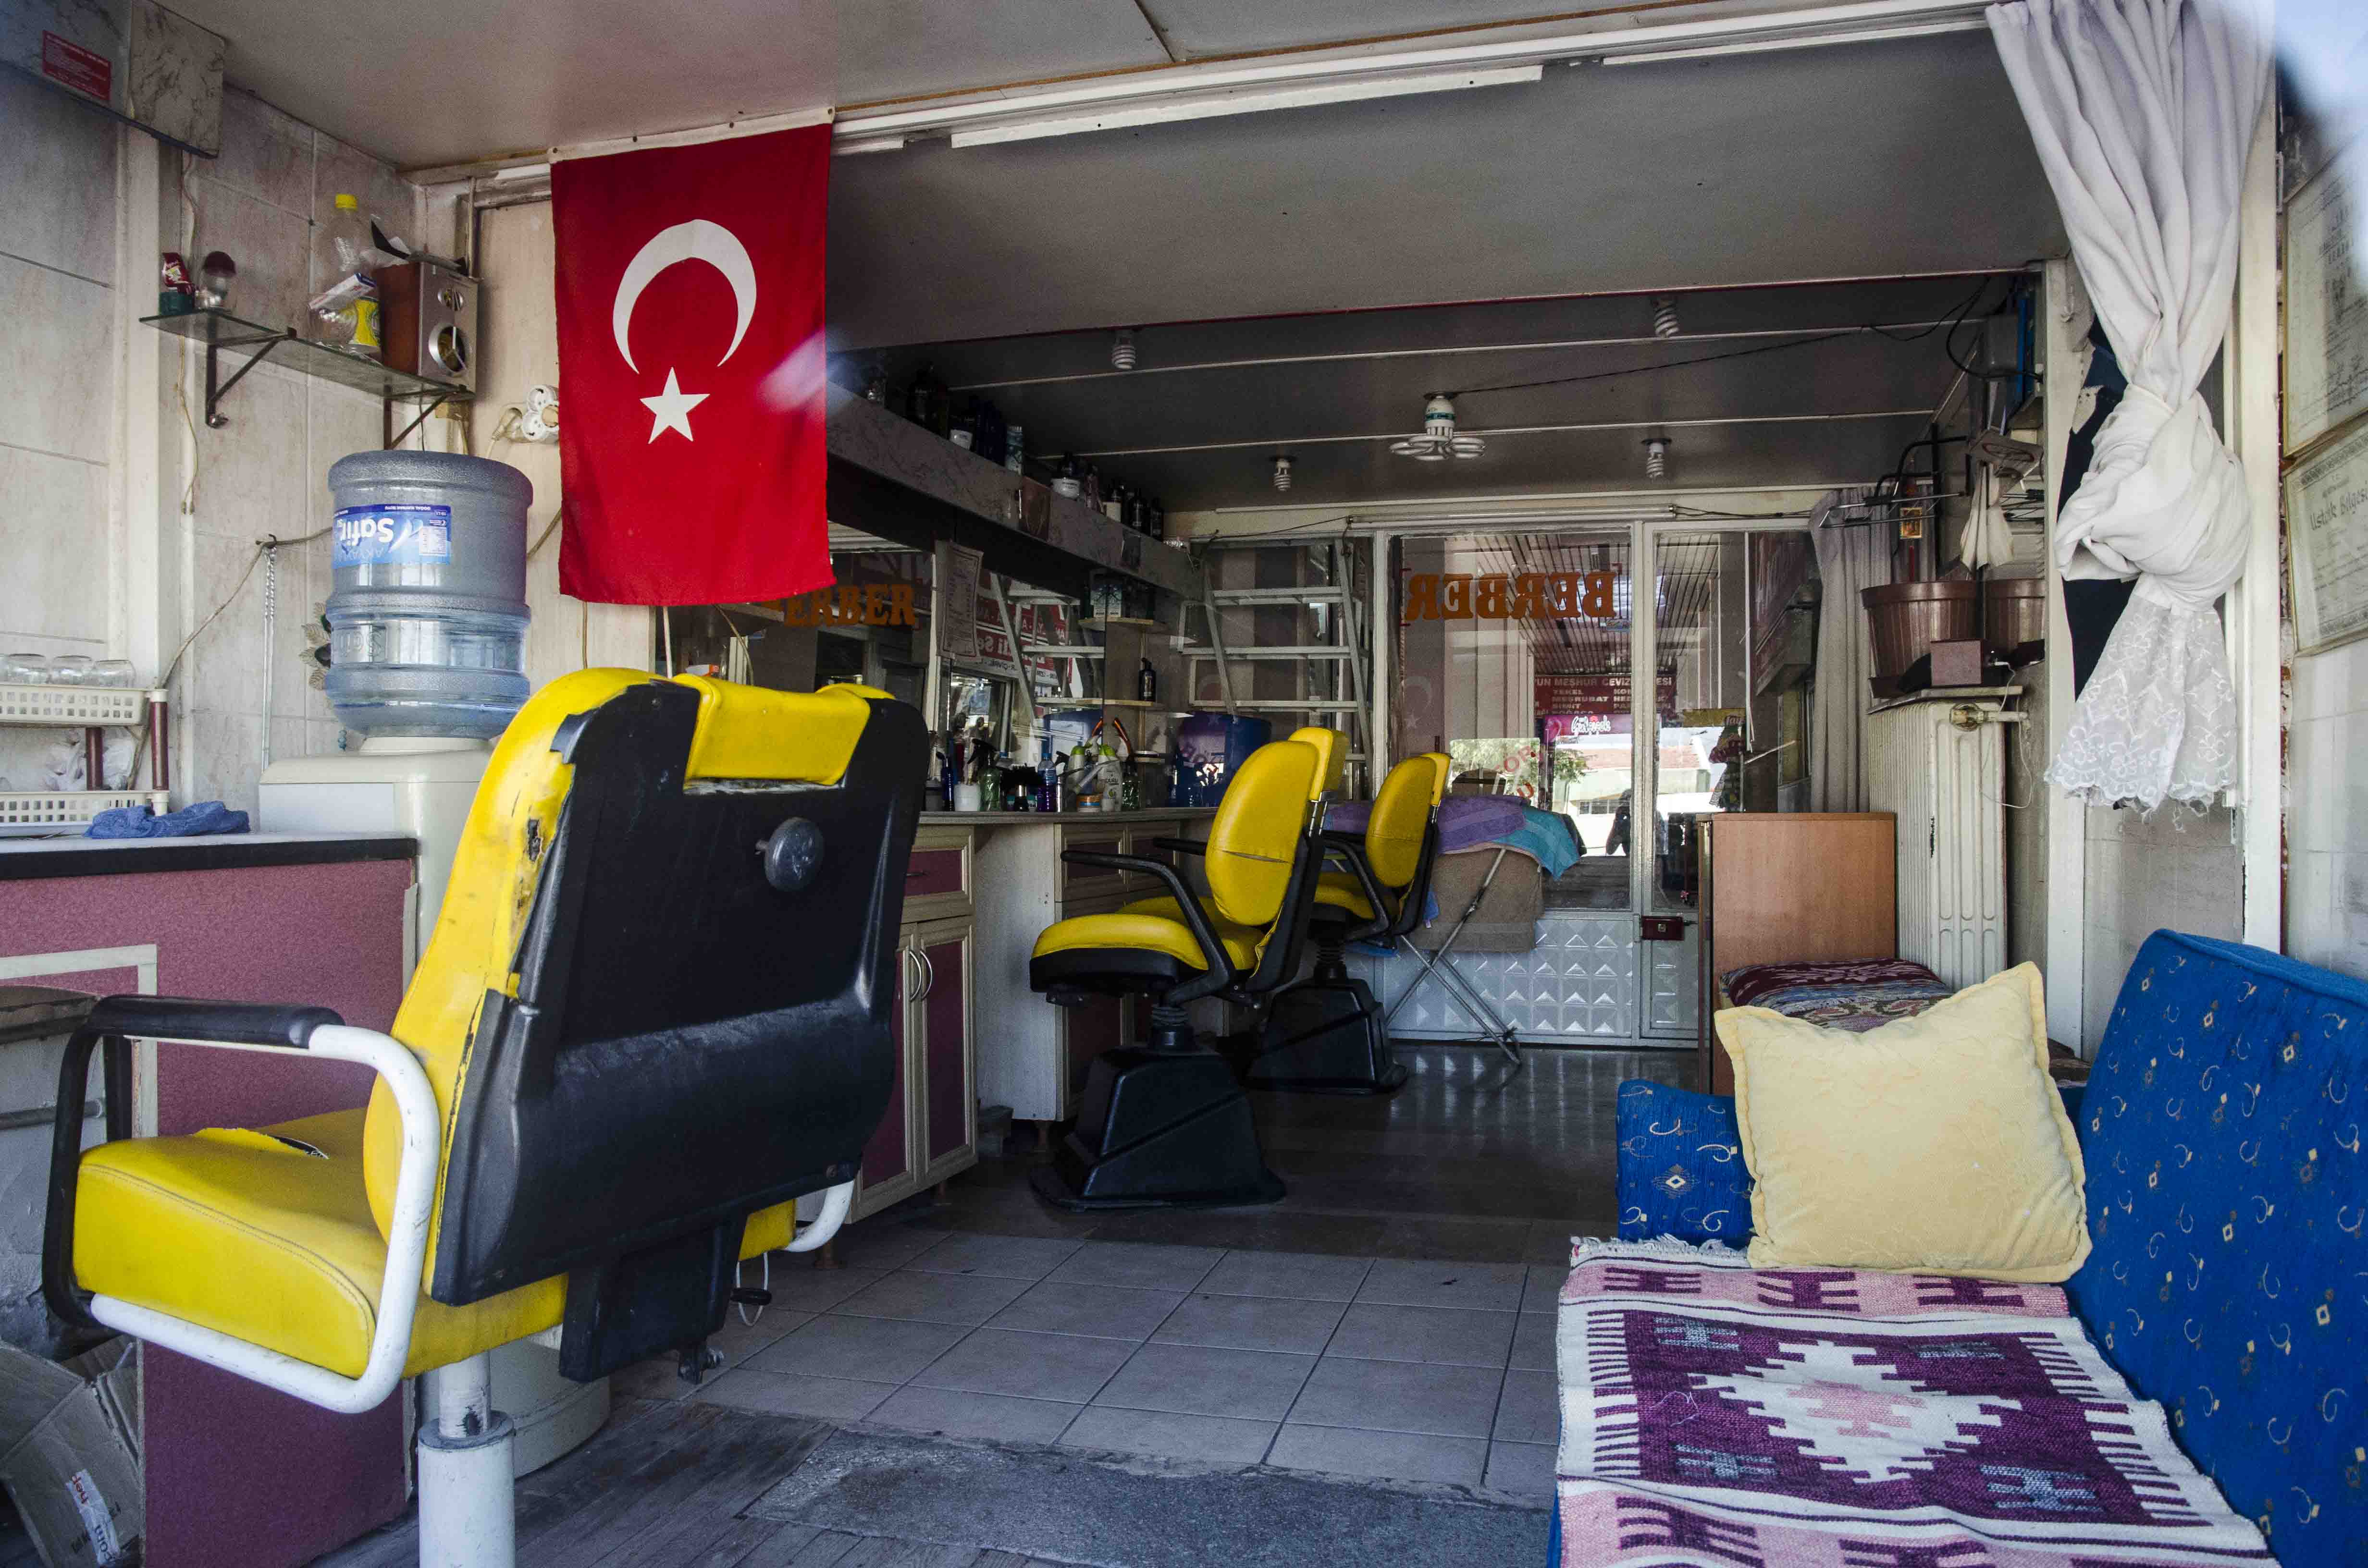 Turkish barber